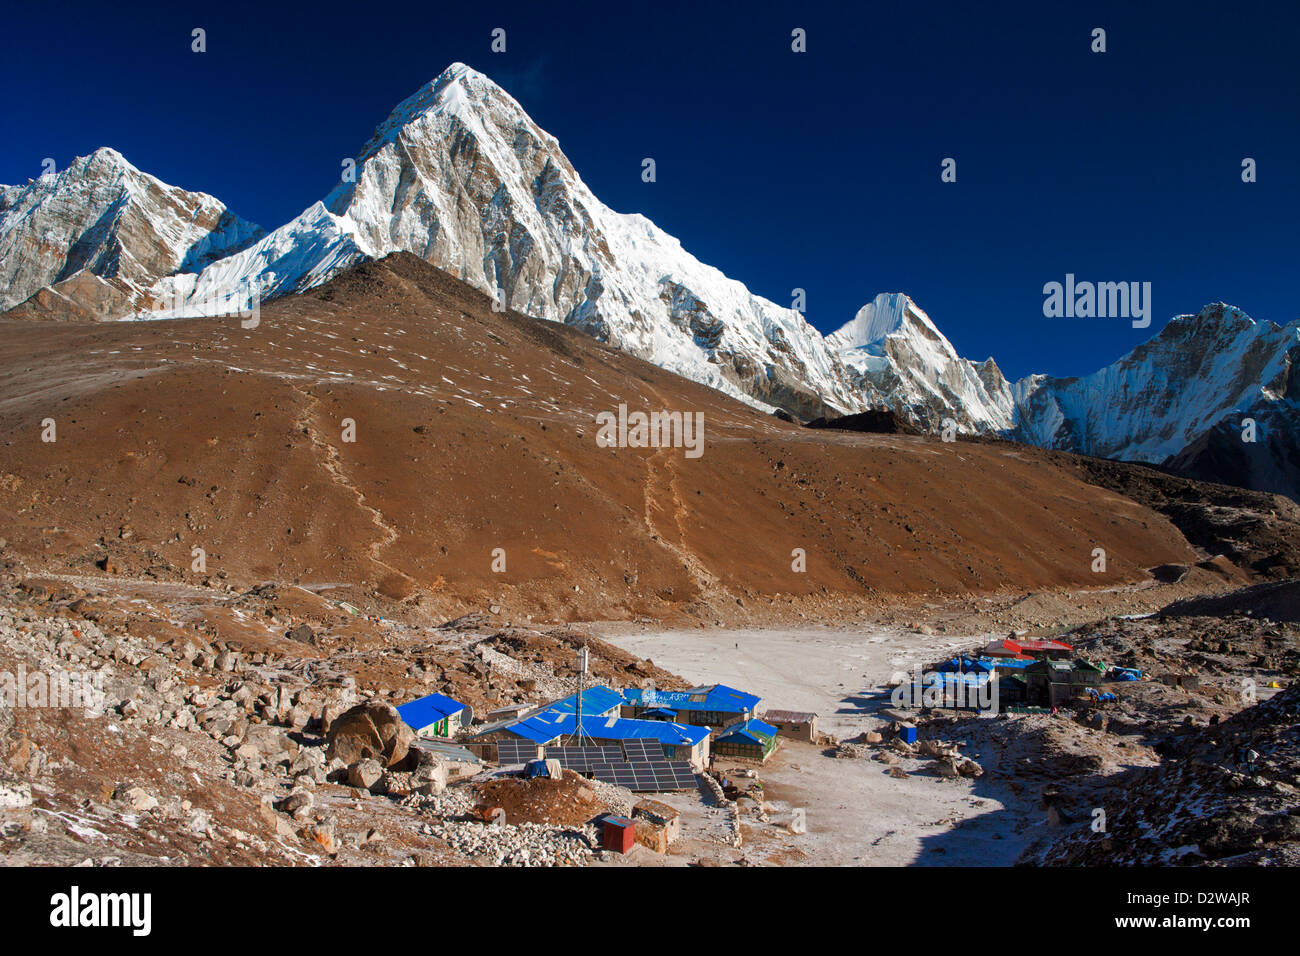 Gorak Shep lodges (5164m) with Mt. Pumori (7165) and Kala Patthar (5550m) on the background, in Sagarmatha NT Park, Nepal. Stock Photo